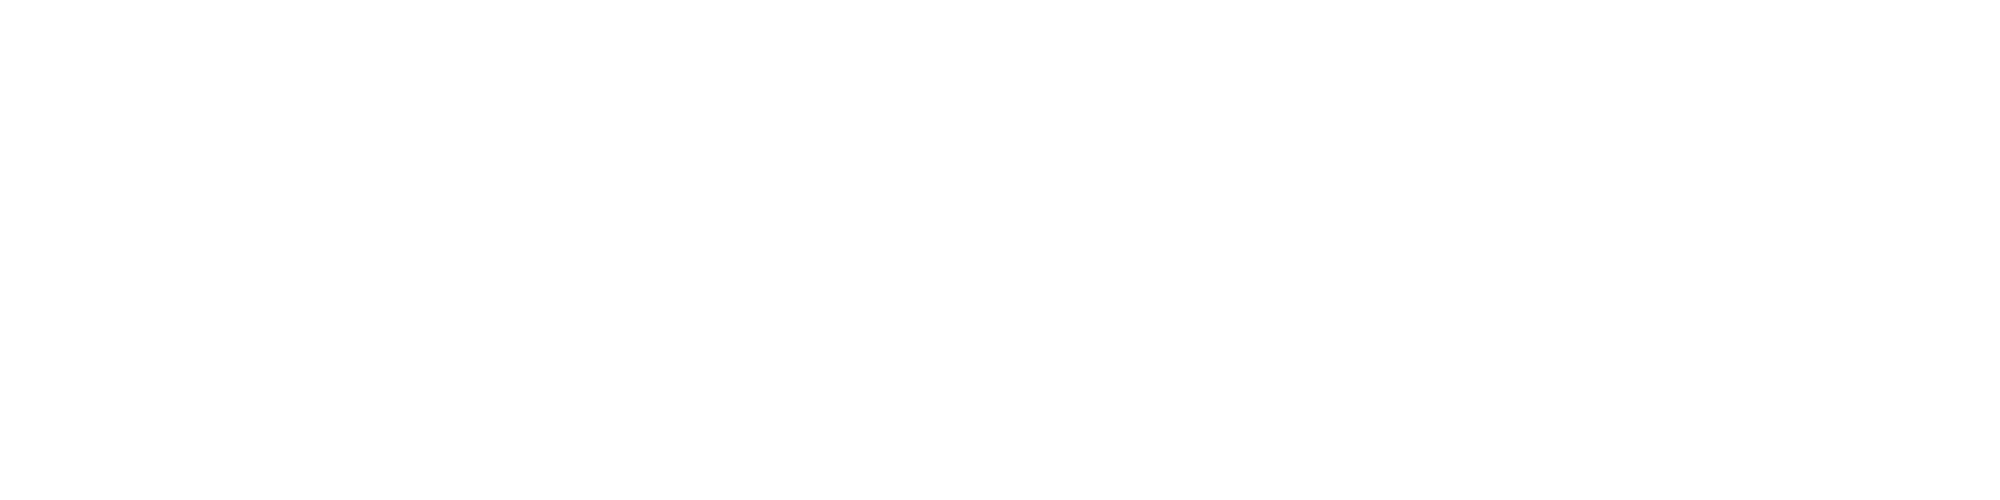 Film School Shorts